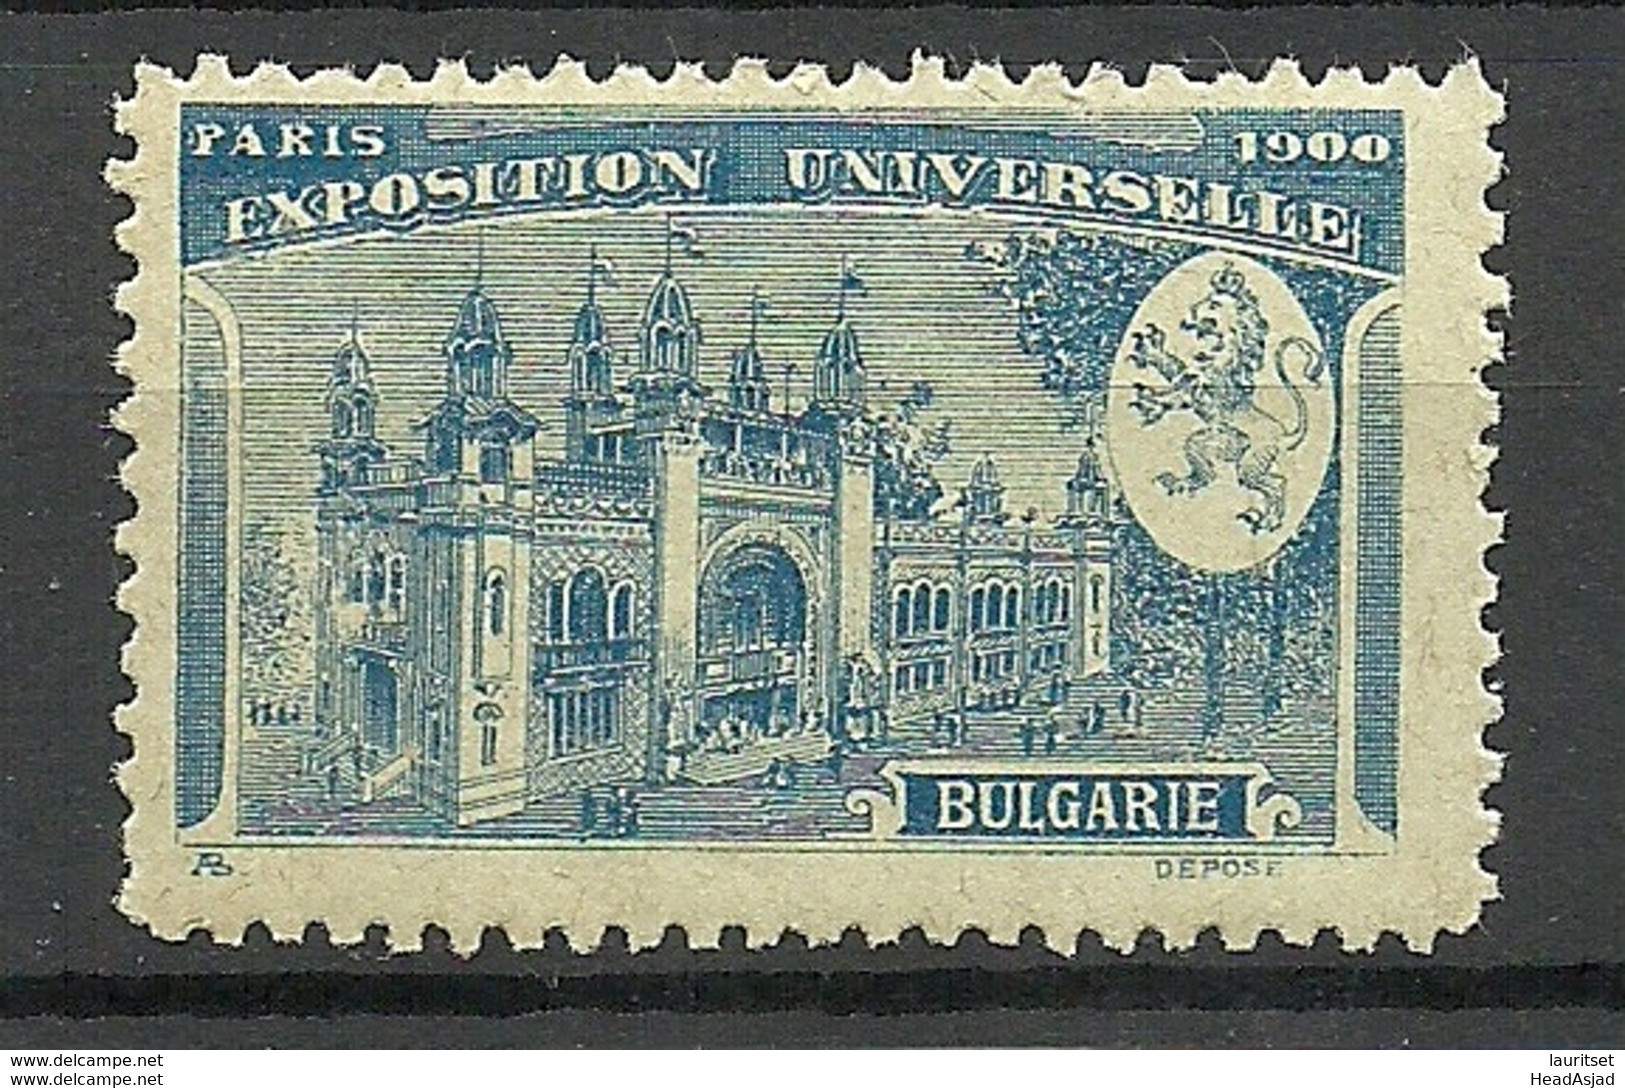 France 1900 EXPOSITION UNIVERSELLE Paris Bulgarie Bulgaria Pavillon MNH - 1900 – Pariis (France)